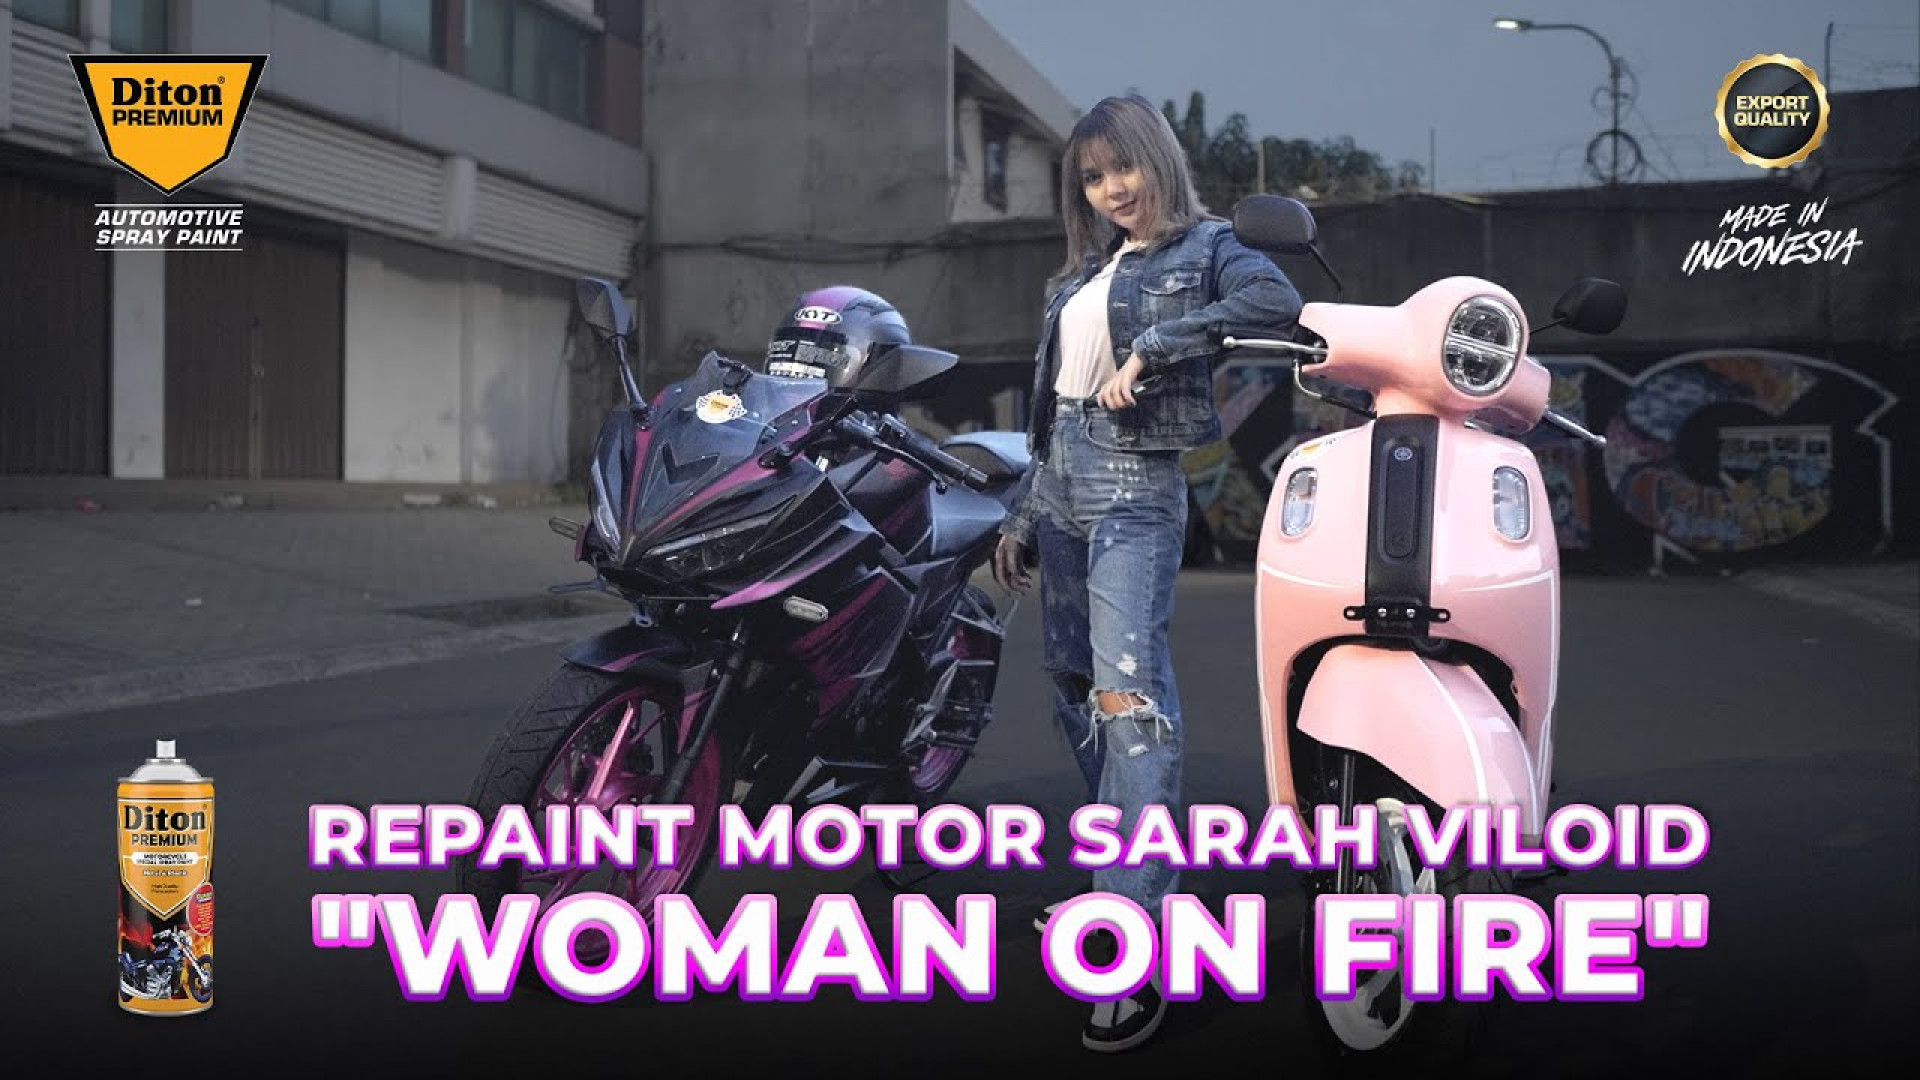 REPAINT MOTOR SARAH VILOID "WOMAN ON FIRE" | EPS.4 SPRAYN'RIDE DITON PREMIUM